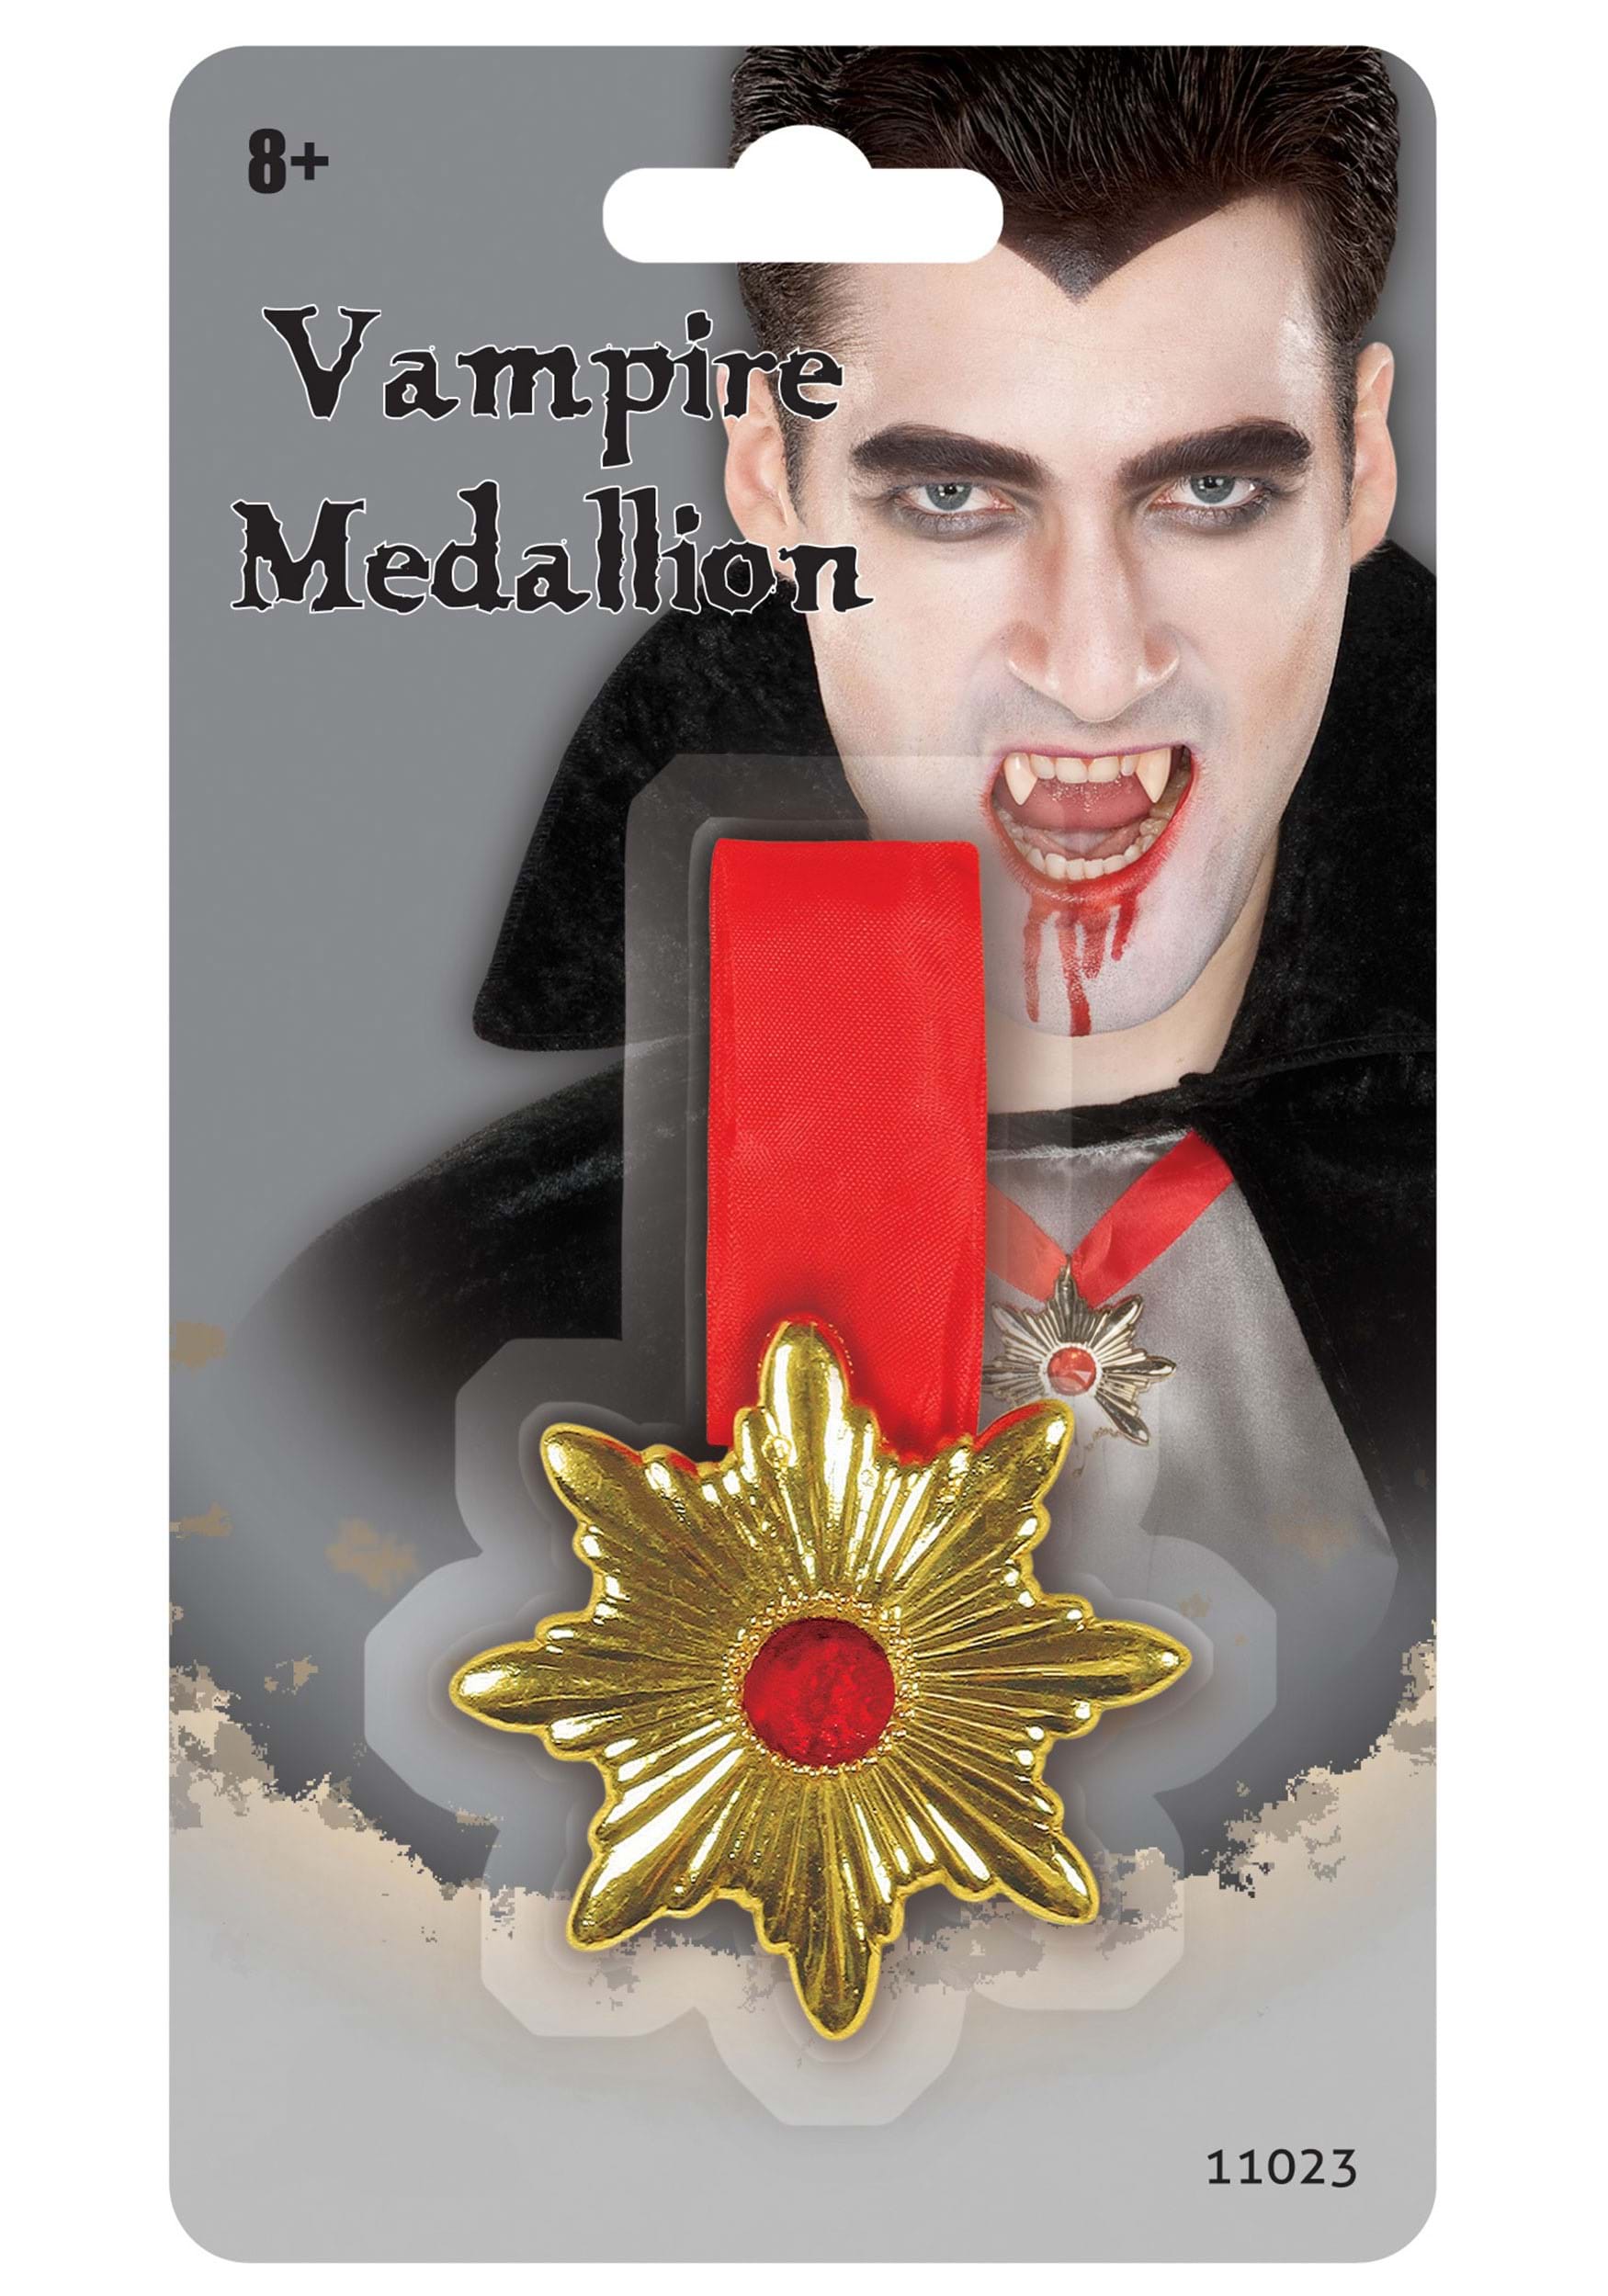 Vampire Medallion Fancy Dress Costume Necklace